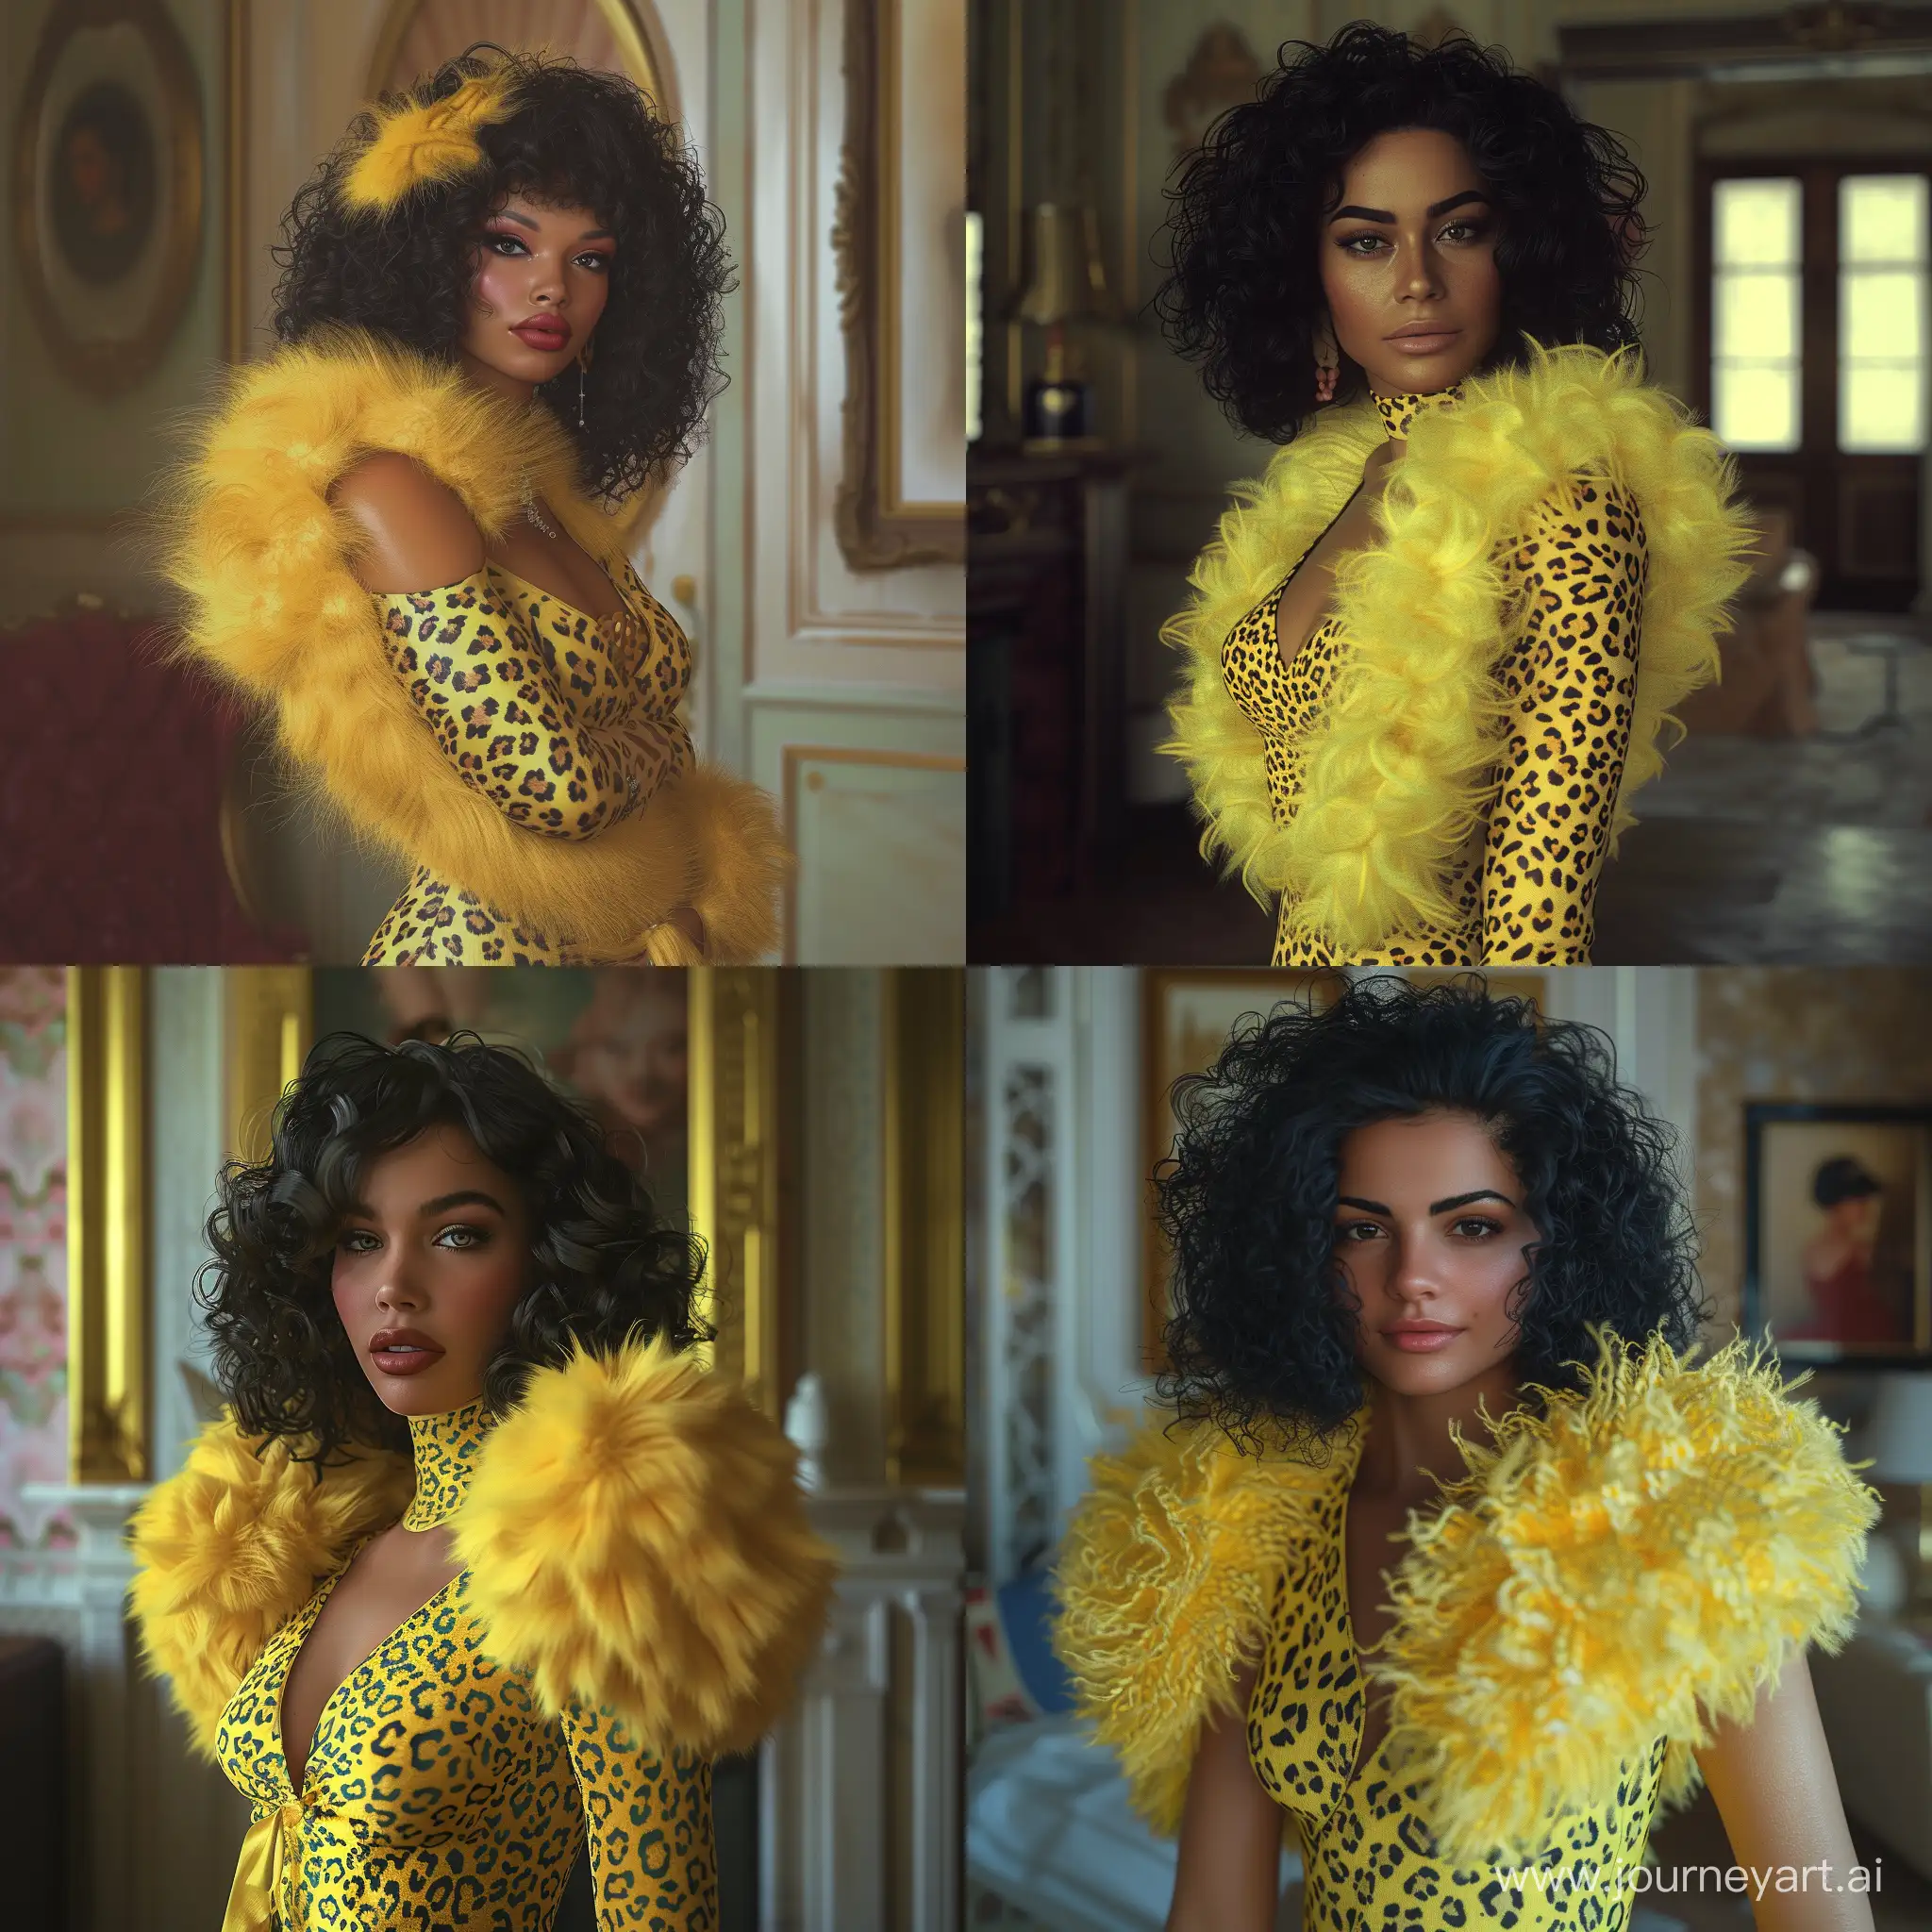 Gorgeous-Woman-in-High-Detail-Yellow-Leopard-Print-Dress-Photorealistic-Portrait